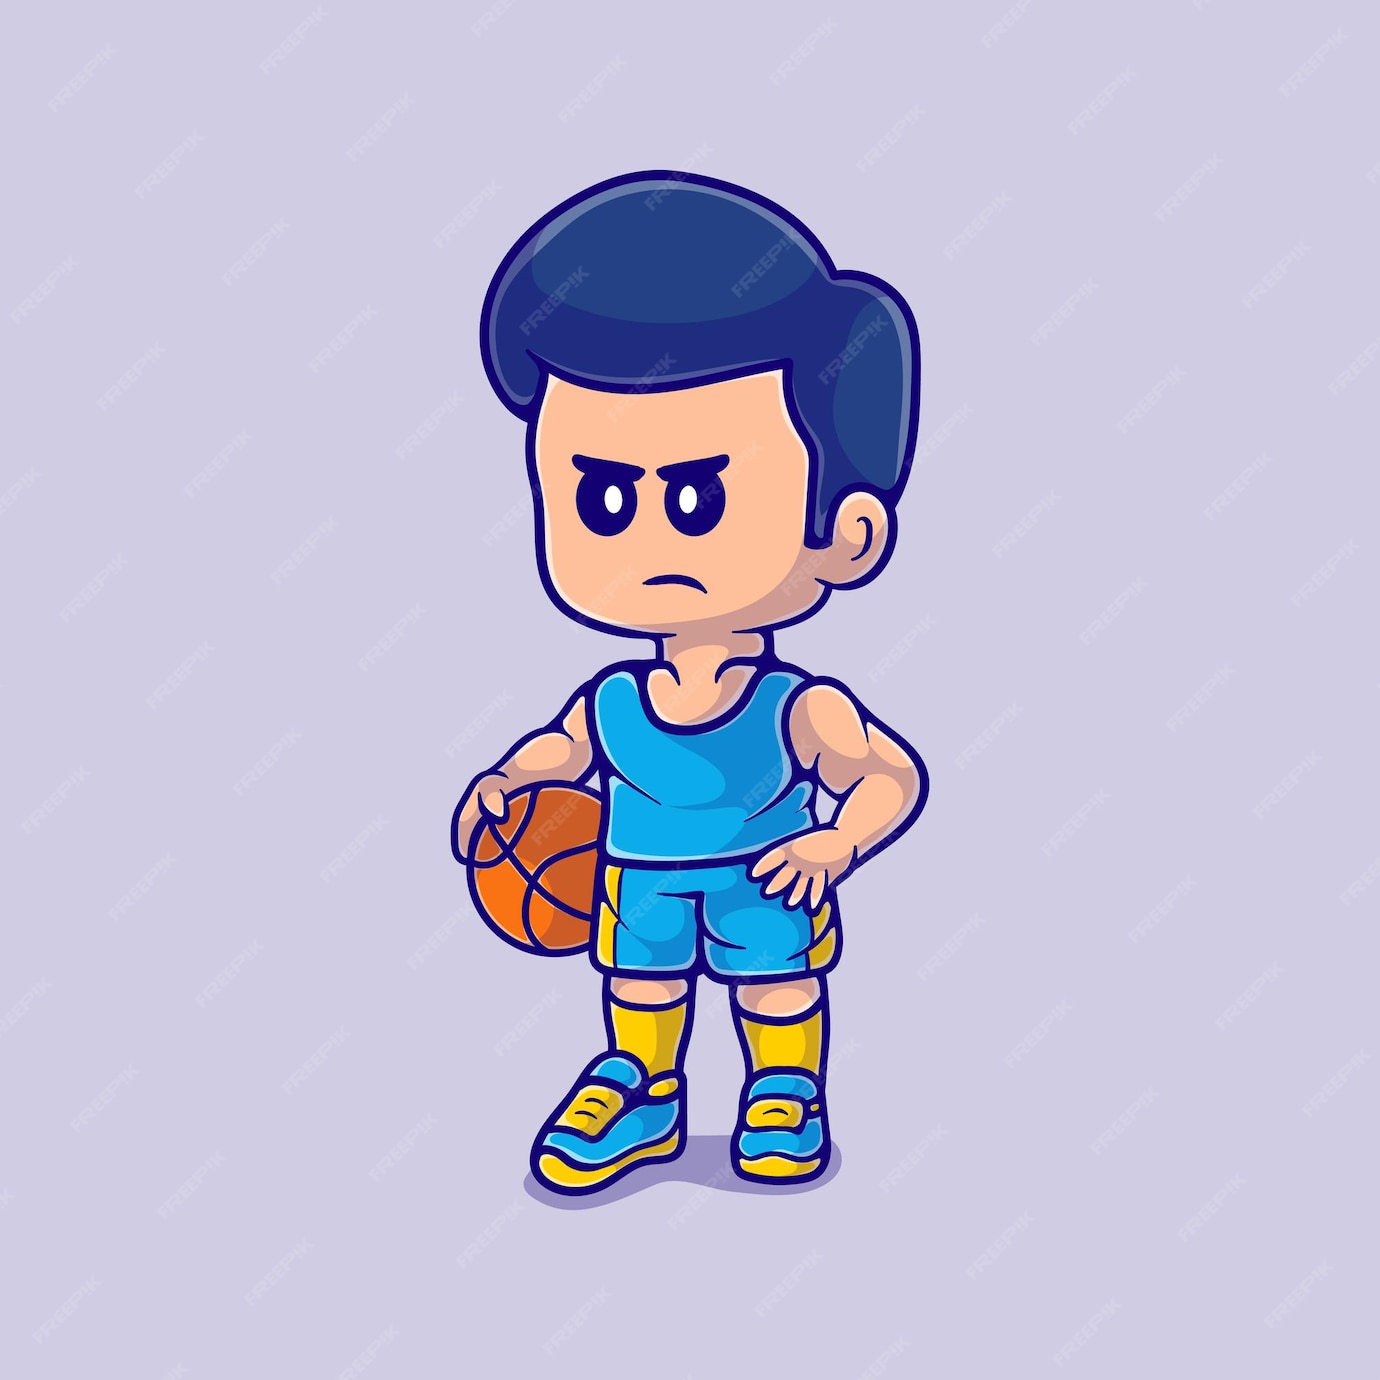 Premium Vector Cute basketball player illustration